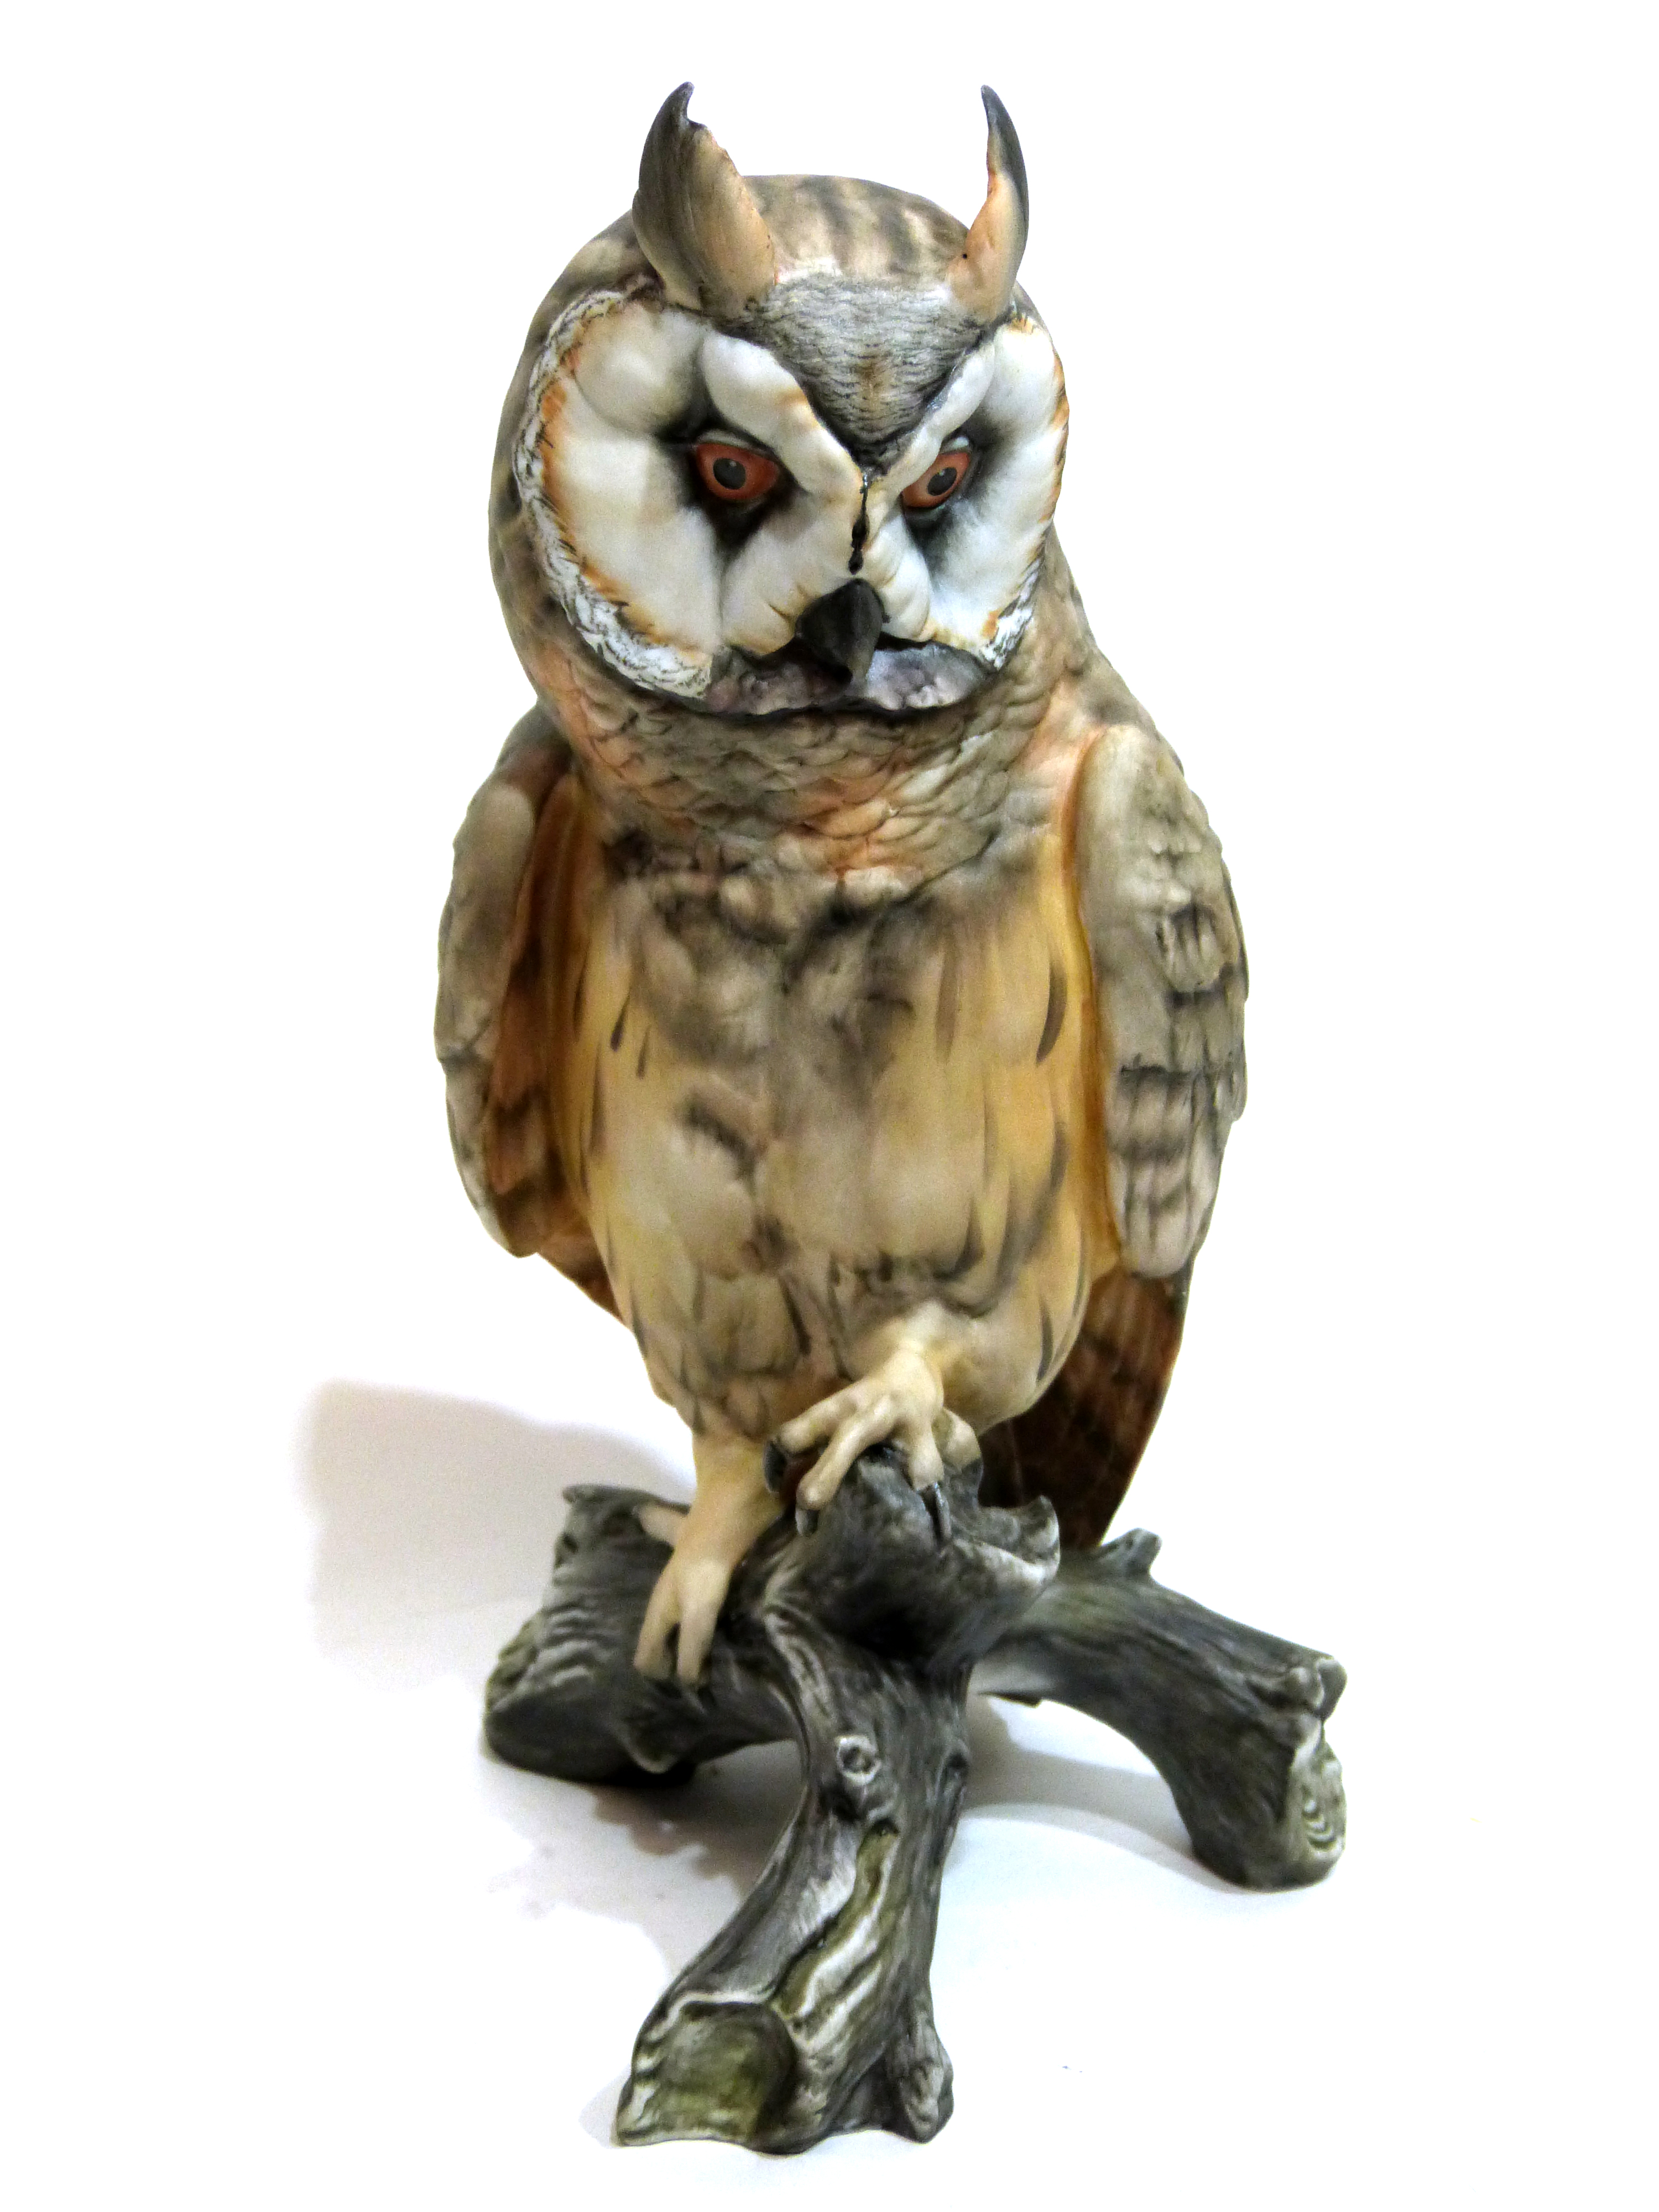 Kaiser porcelain model of an owl standing on a tree stump, 22cm high